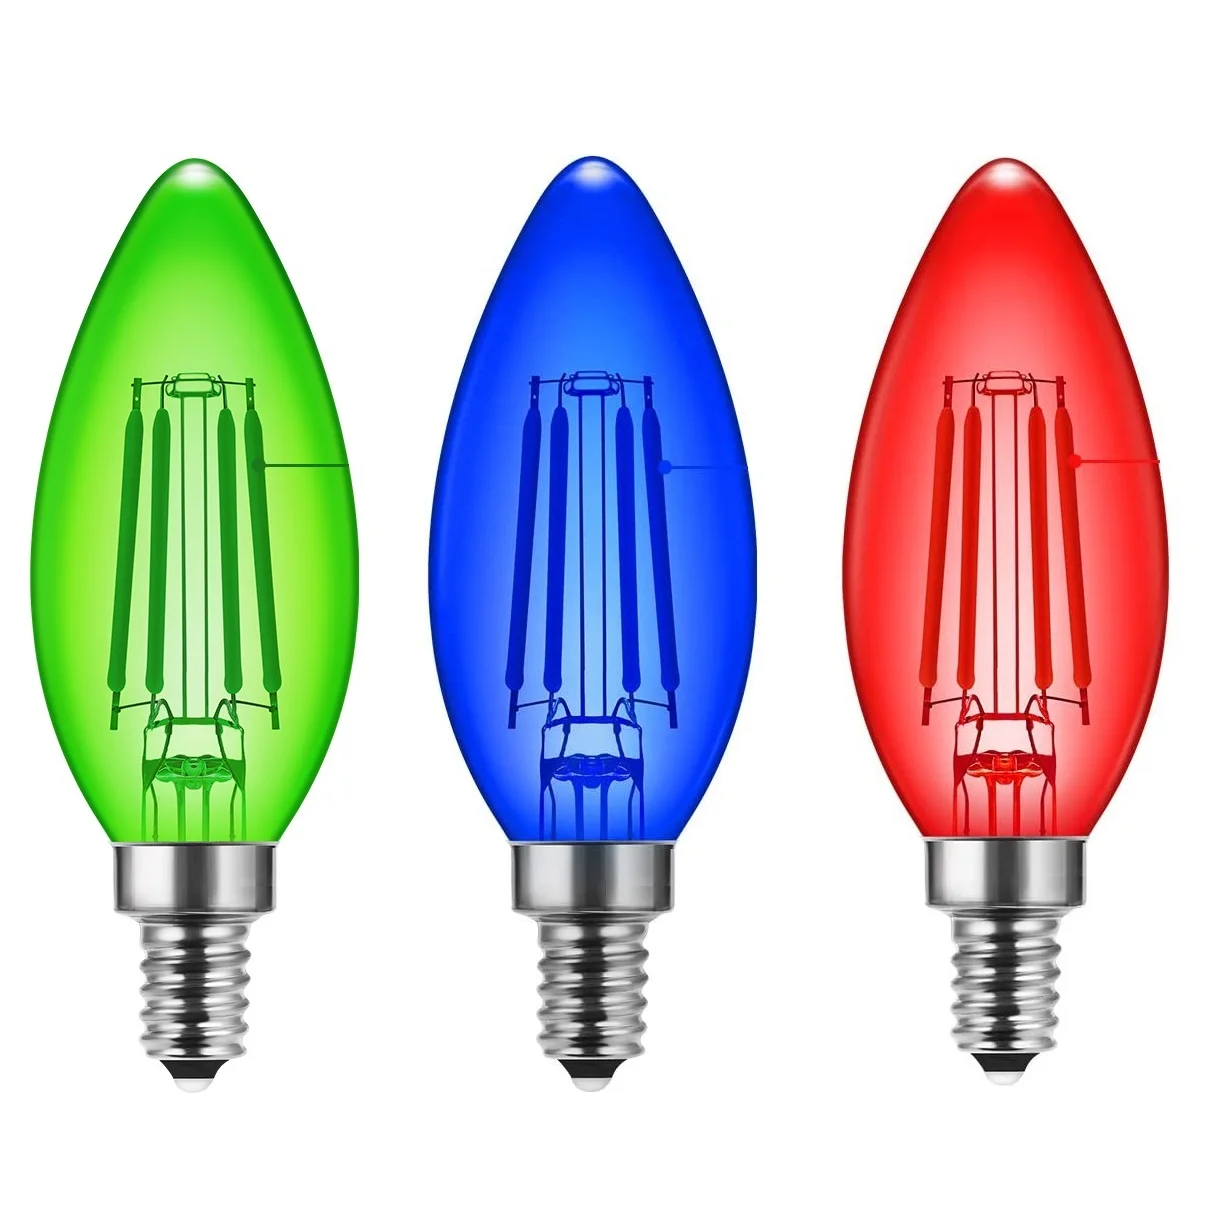 Red/Blue/Green LED Light  C35 E12 Candelabra Light Bulbs 4W Vintage Filament Led Light Bulb Tiny Light Bulb for Party, Bar